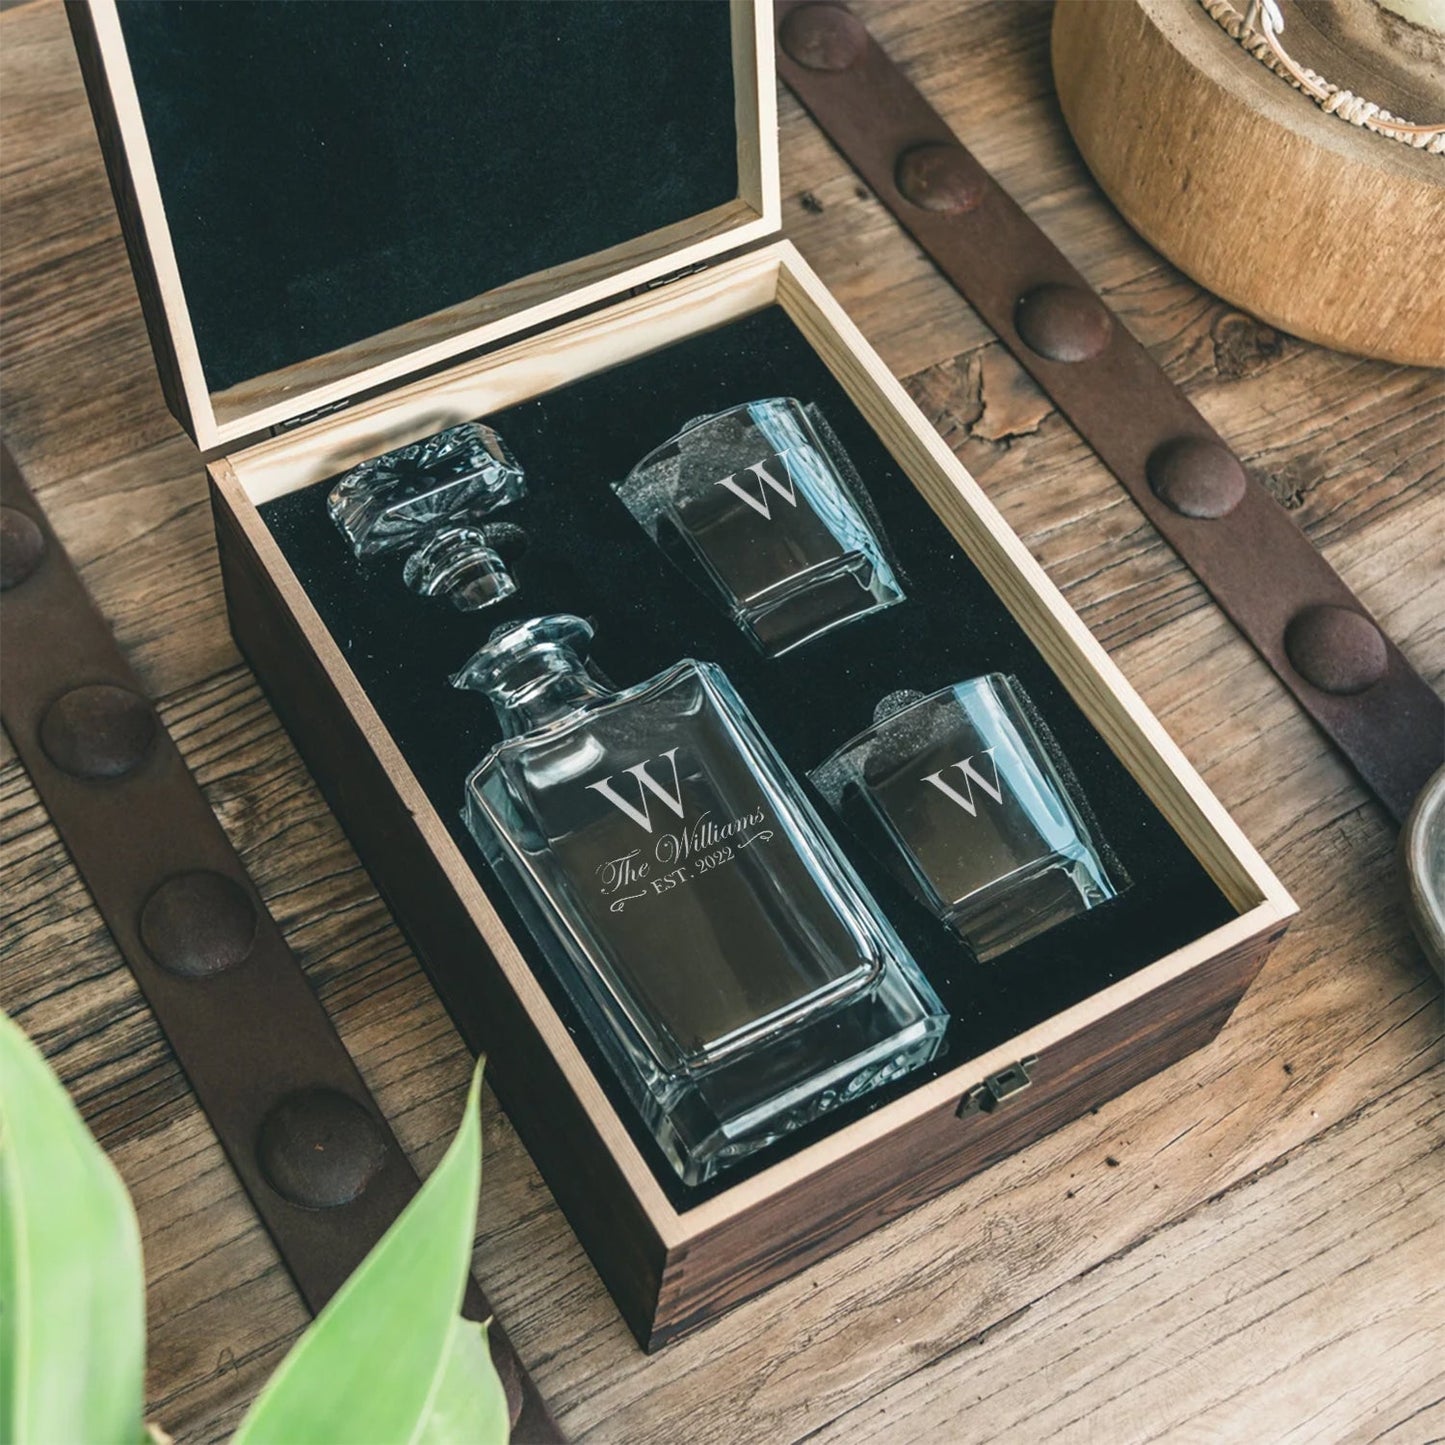 Engraved Scotch Glass & Stone Wooden Gift Box Set